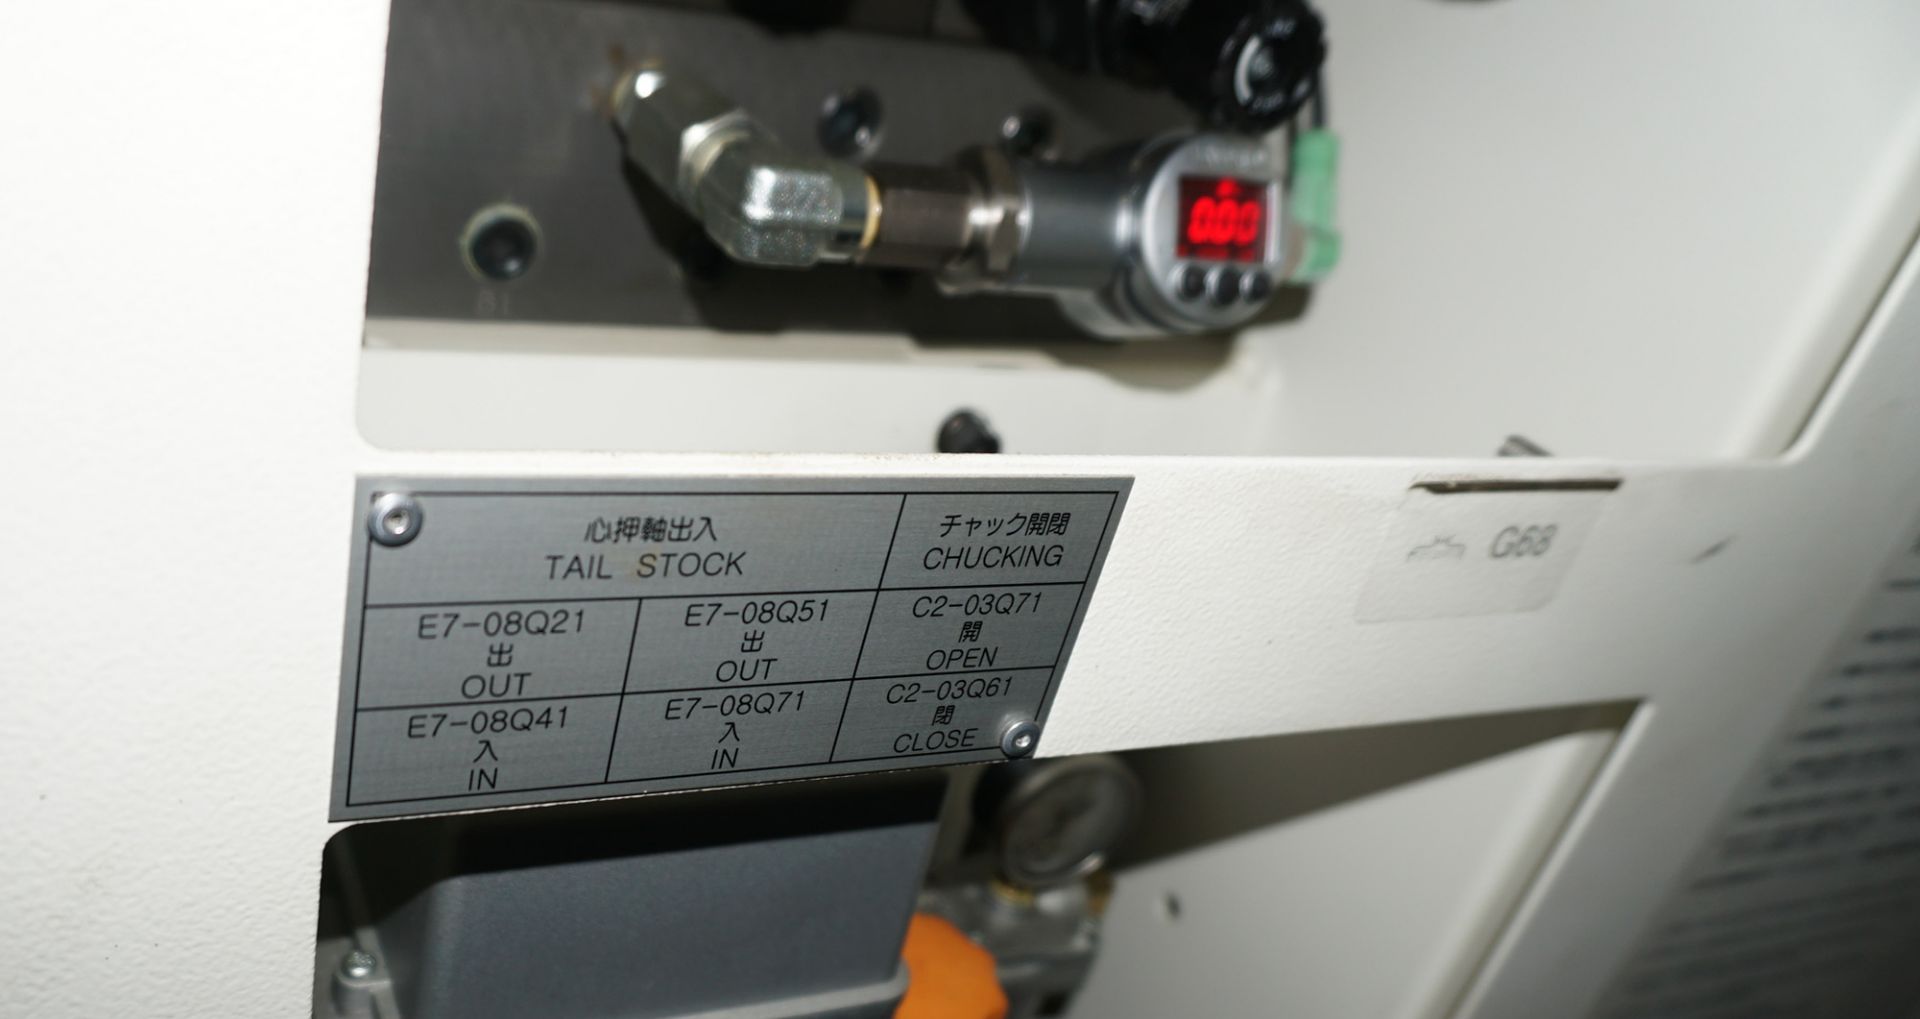 DMG MORI (2015) ECOTURN 450 CNC TURNING CENTER WITH DMG MORI SLIMLINE CNC M730BM CONTROL, 10" CHUCK, - Image 11 of 16